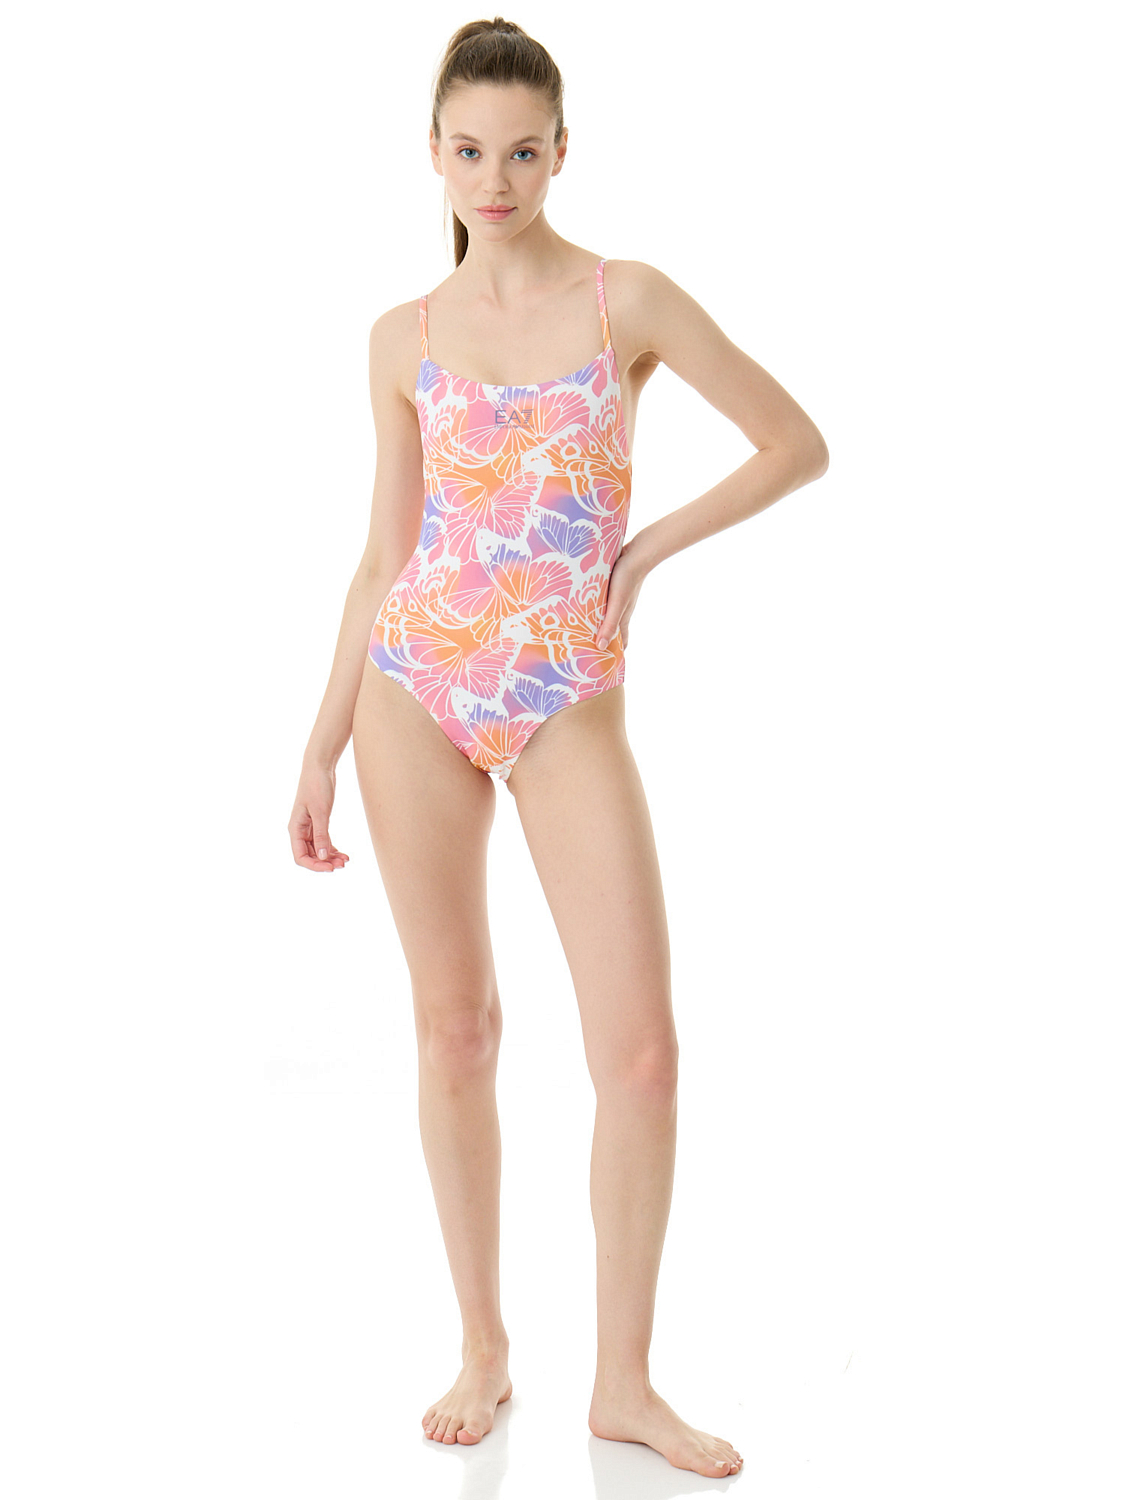 Купальник EA7 Emporio Armani Graphic Bikini Triangle Bianco/Arancio